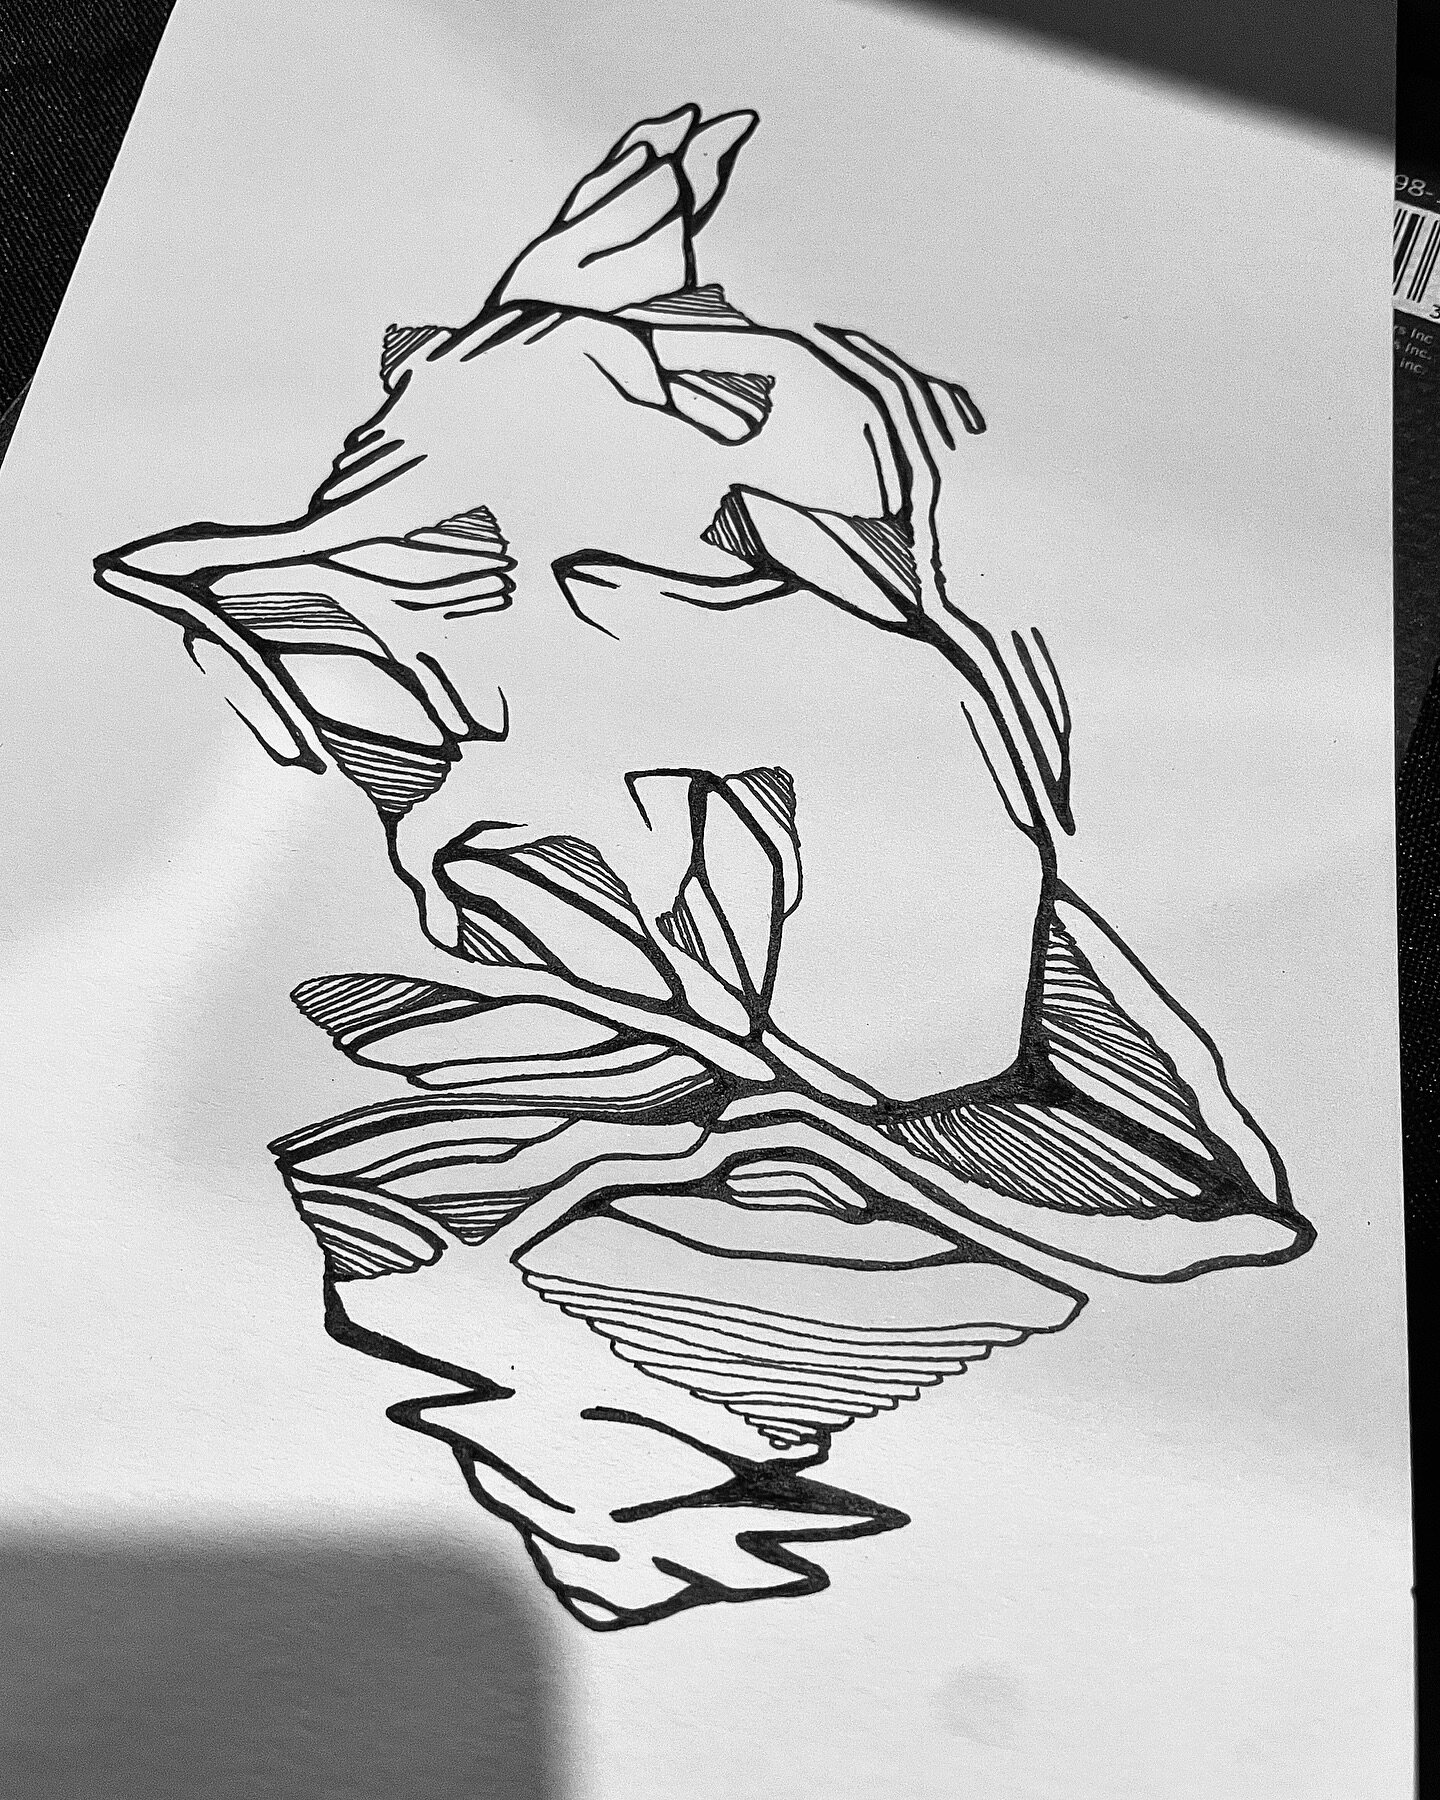 Inspired by rocks #doodle 
__________
#sketchbook #draw #drawing #line #blackandwhite #penandink #art #artist #artoftheday #seattle #seattleart #seattleartpost #seattleartist #drawdrawdraw #draweveryday #doodling #artofvisuals #arts_promote